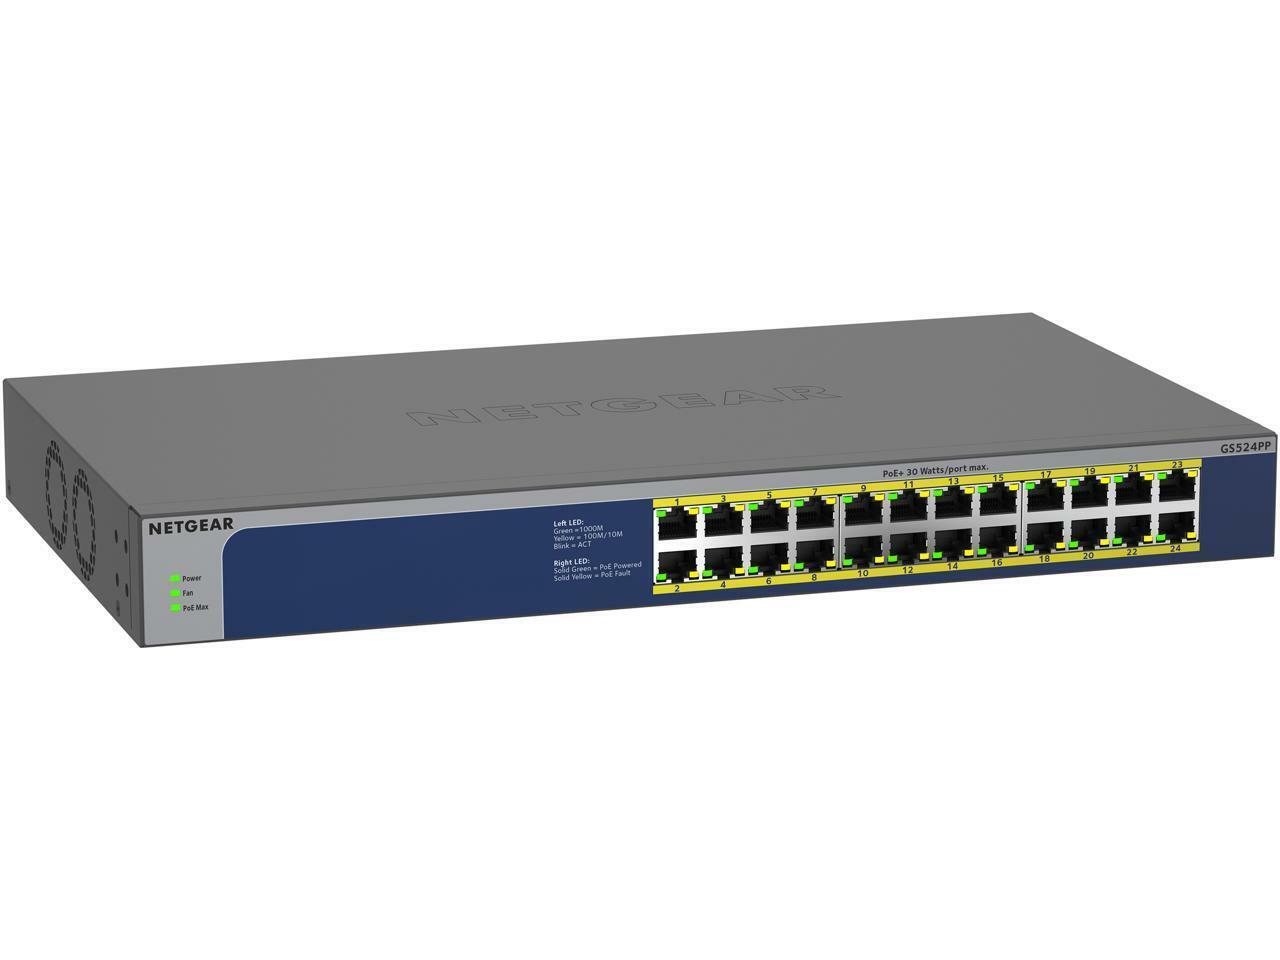 NETGEAR 24-Port Gigabit Ethernet Unmanaged PoE Switch (GS524PP) - with 24 x PoE+